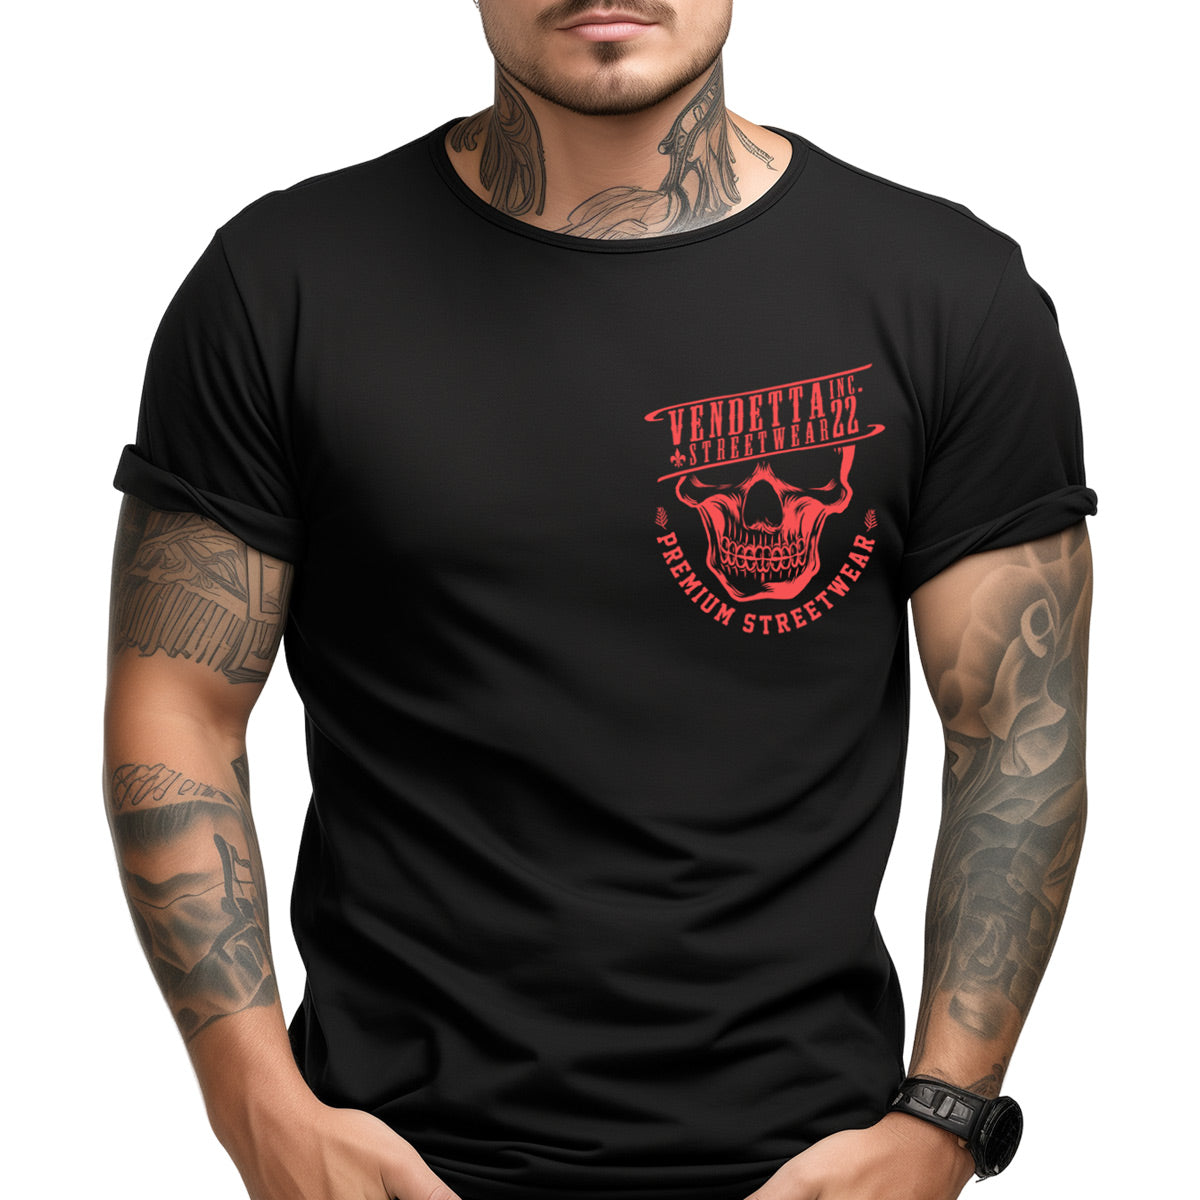 Vendetta Inc. Shirt schwarz Hatchet